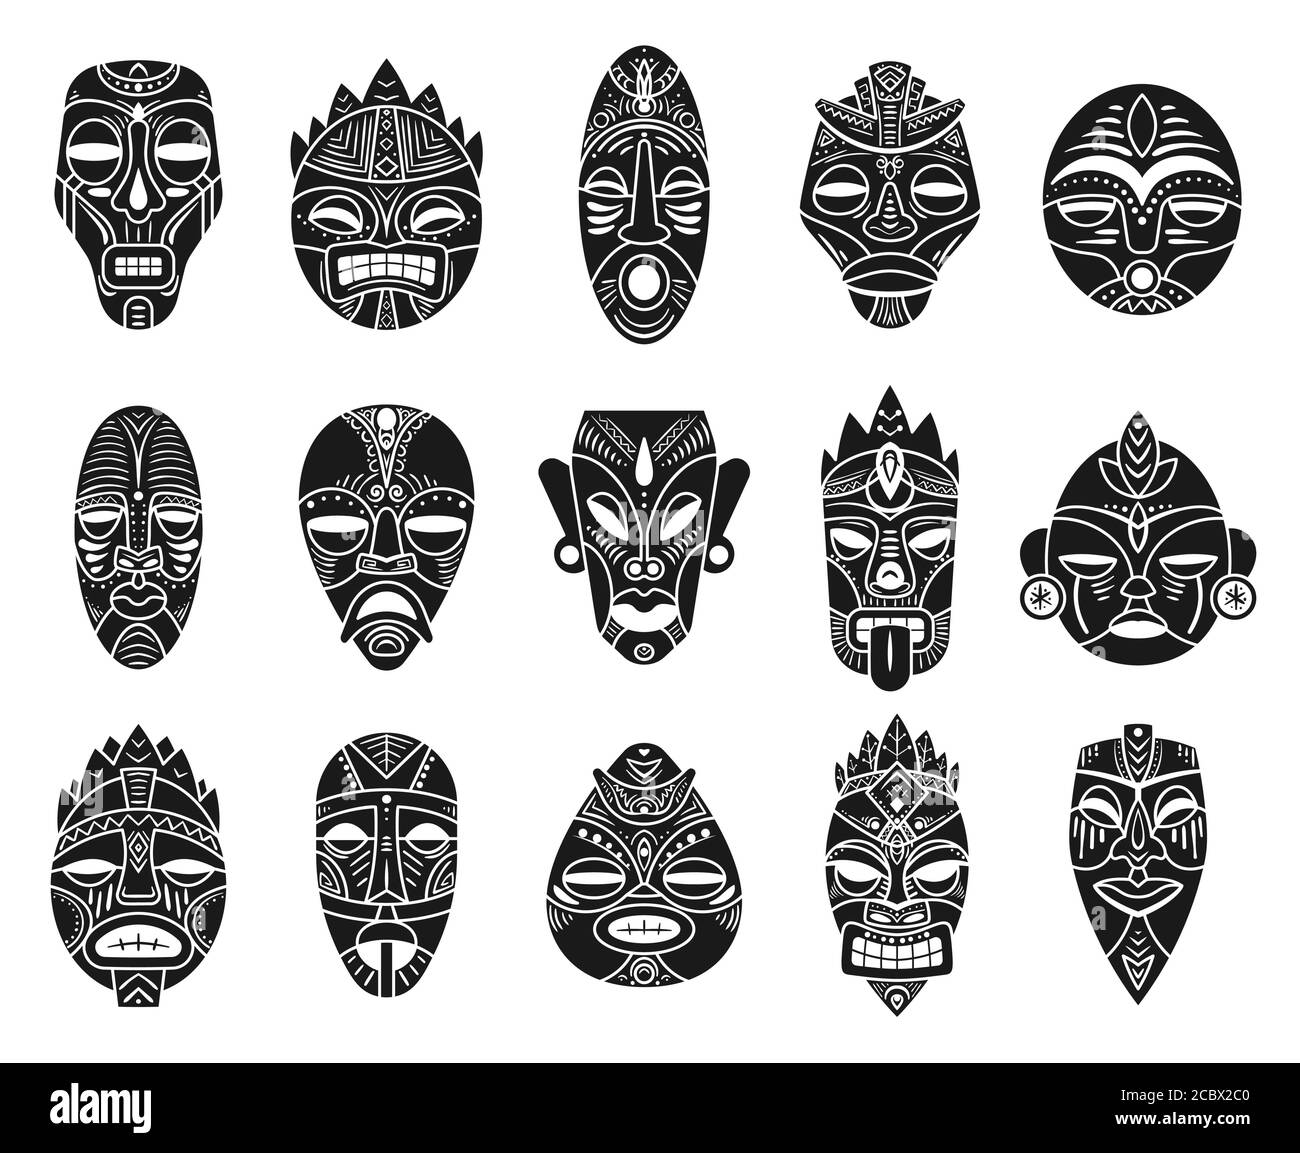 Idol-Maske. Monochrome schwarze hawaii Tiki tahitian Ritual Totem, exotische traditionelle Kultur antike Mythologie, ethnische Ornament Vektor-Masken Stock Vektor